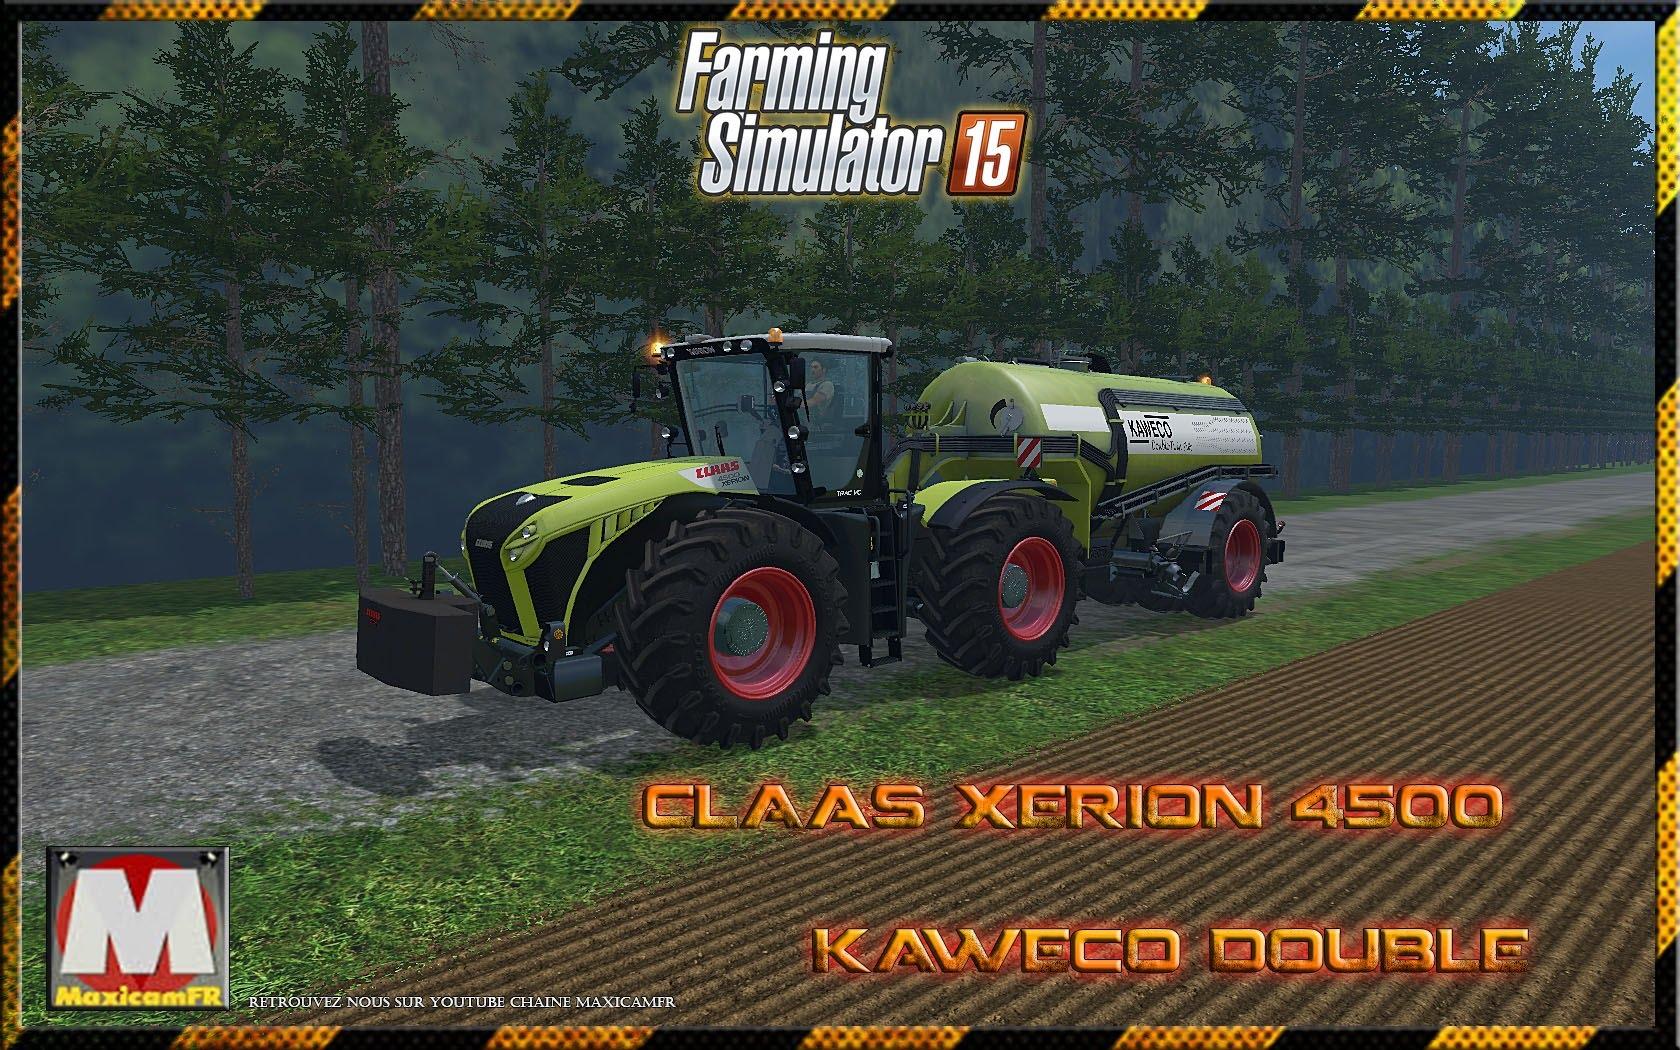 CLAAS XERION 4500 V2.0 | Farming simulator 17 - FS17 mods ...